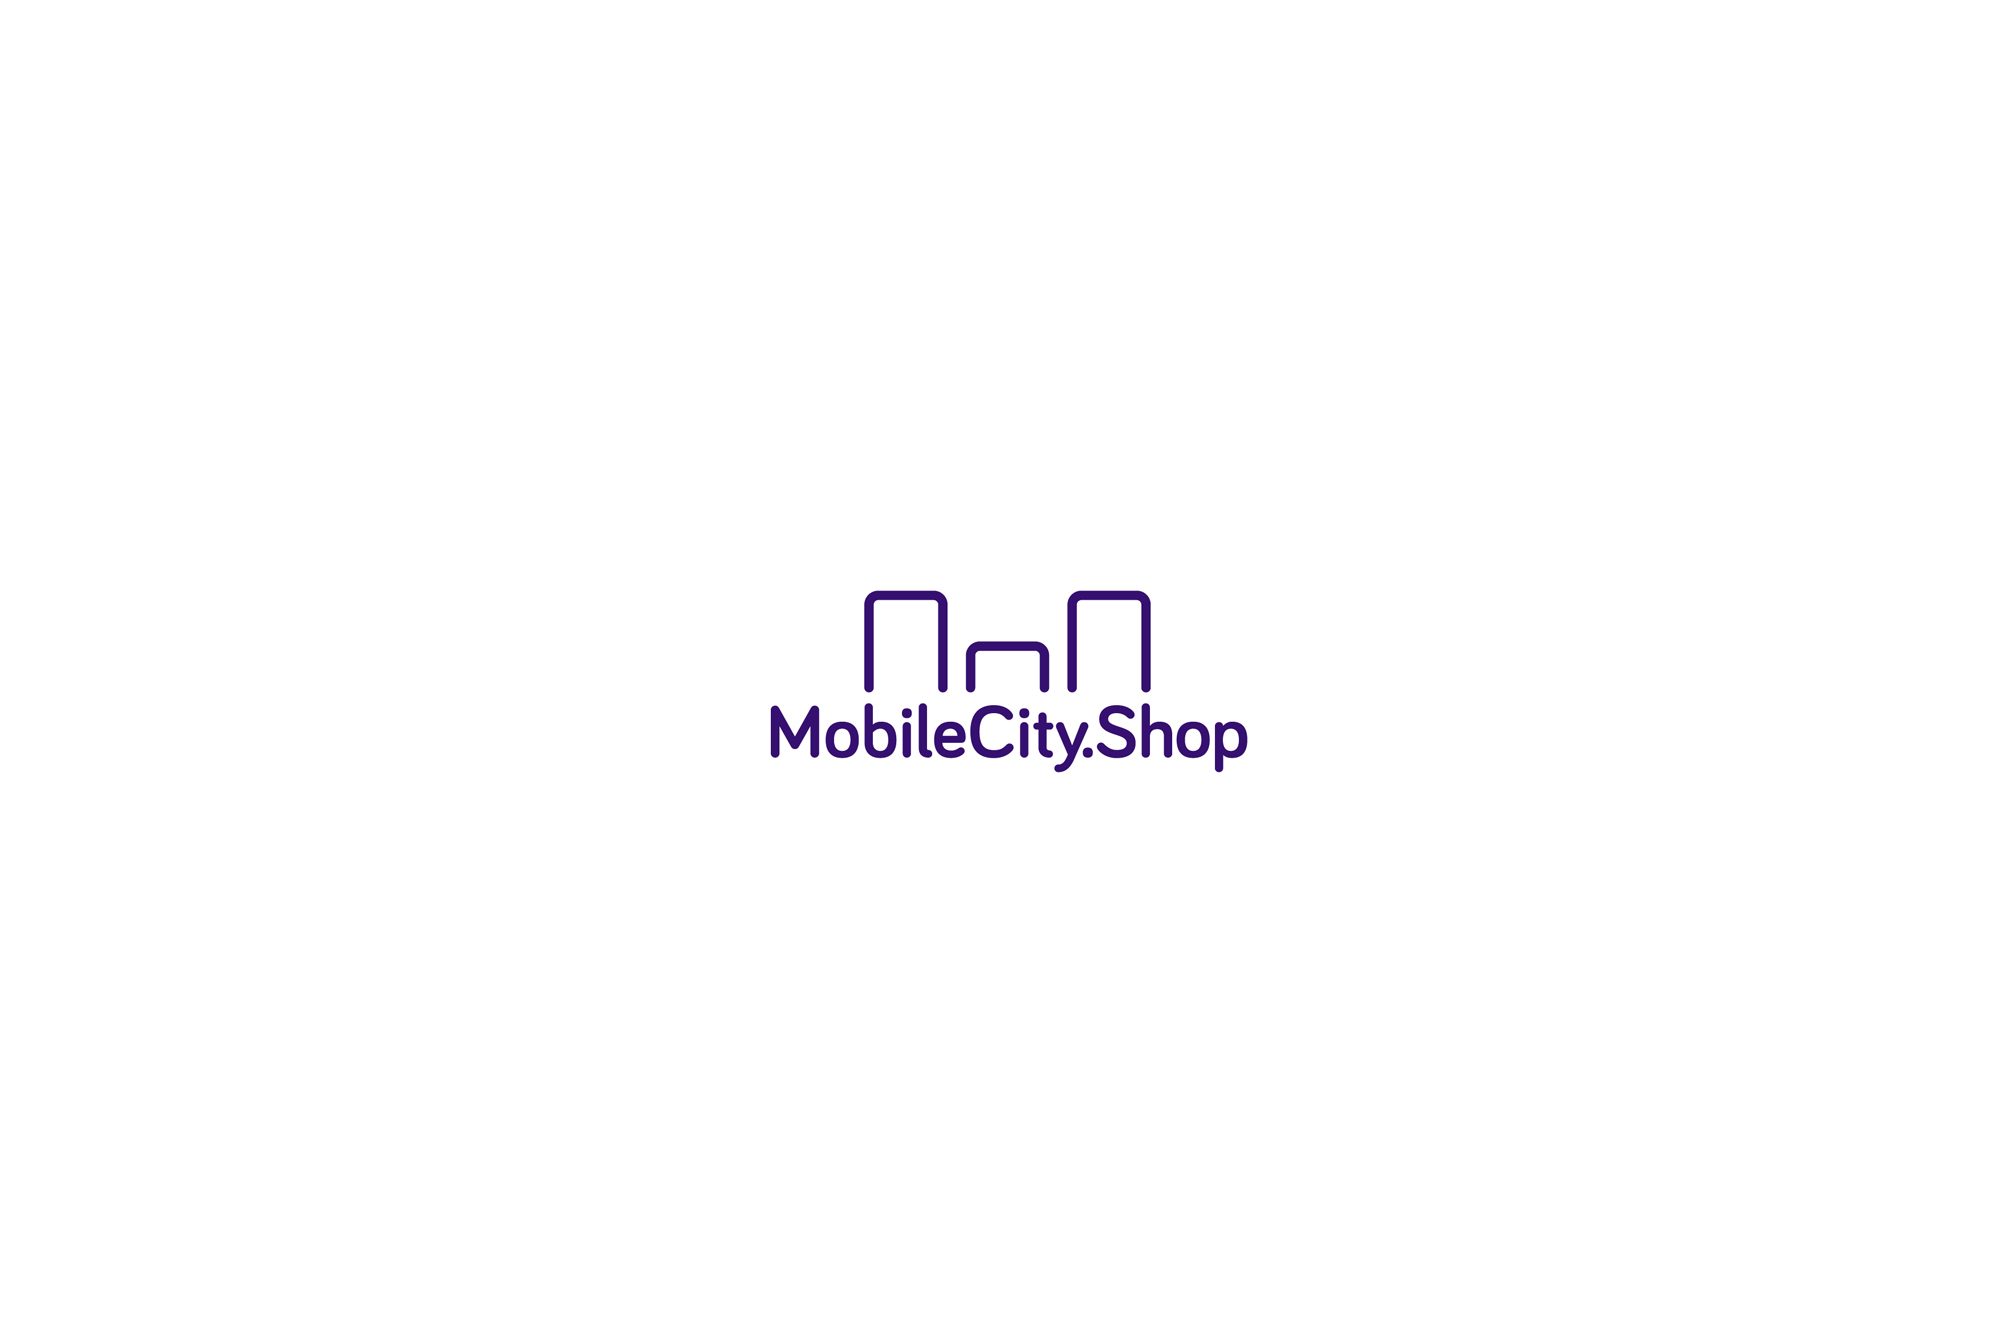 MobileCity.Shop - logo monochrom